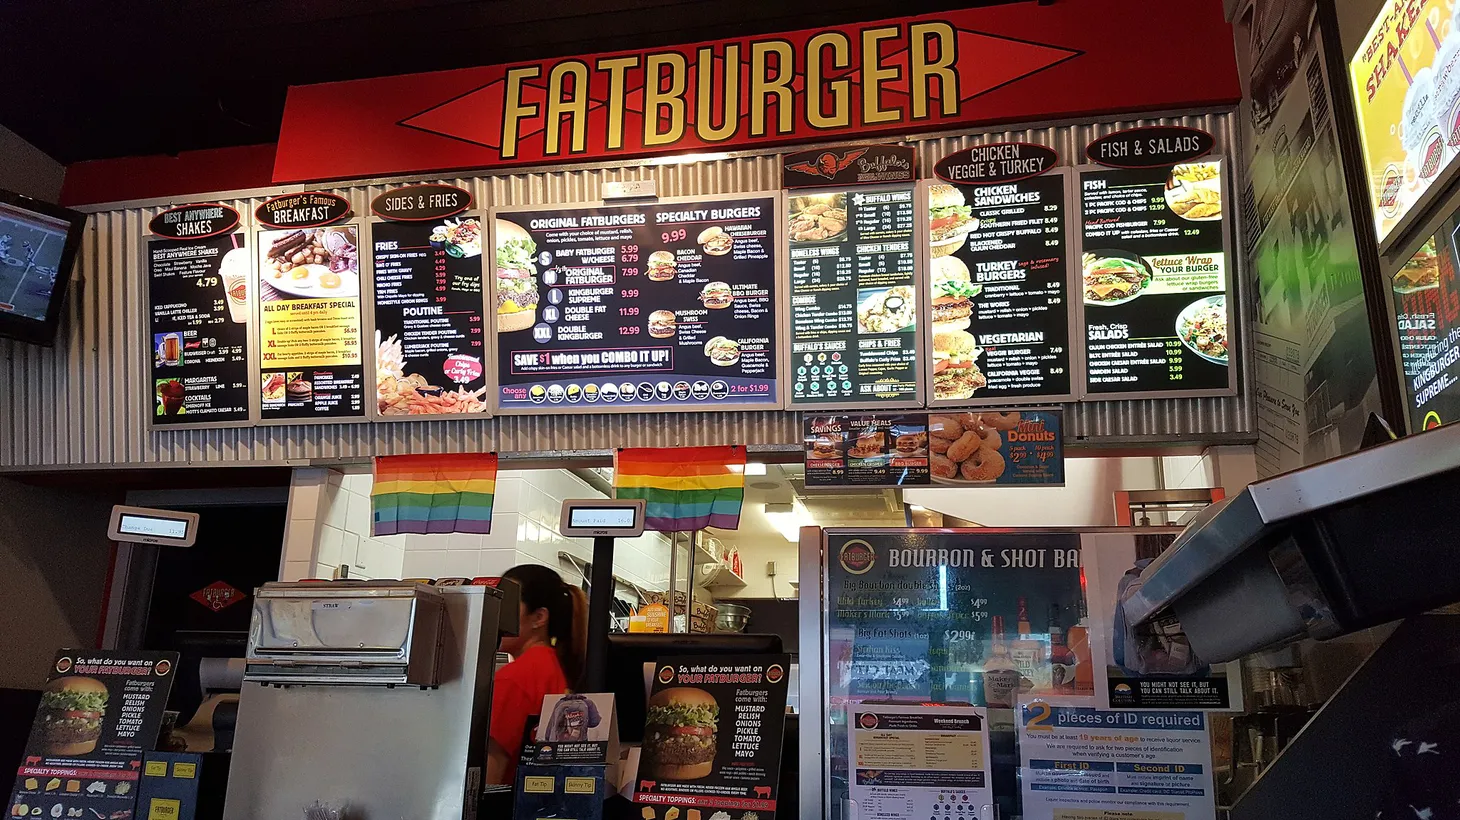 Lovie Yancey started the restaurant chain Fat Burger in the 1940s.